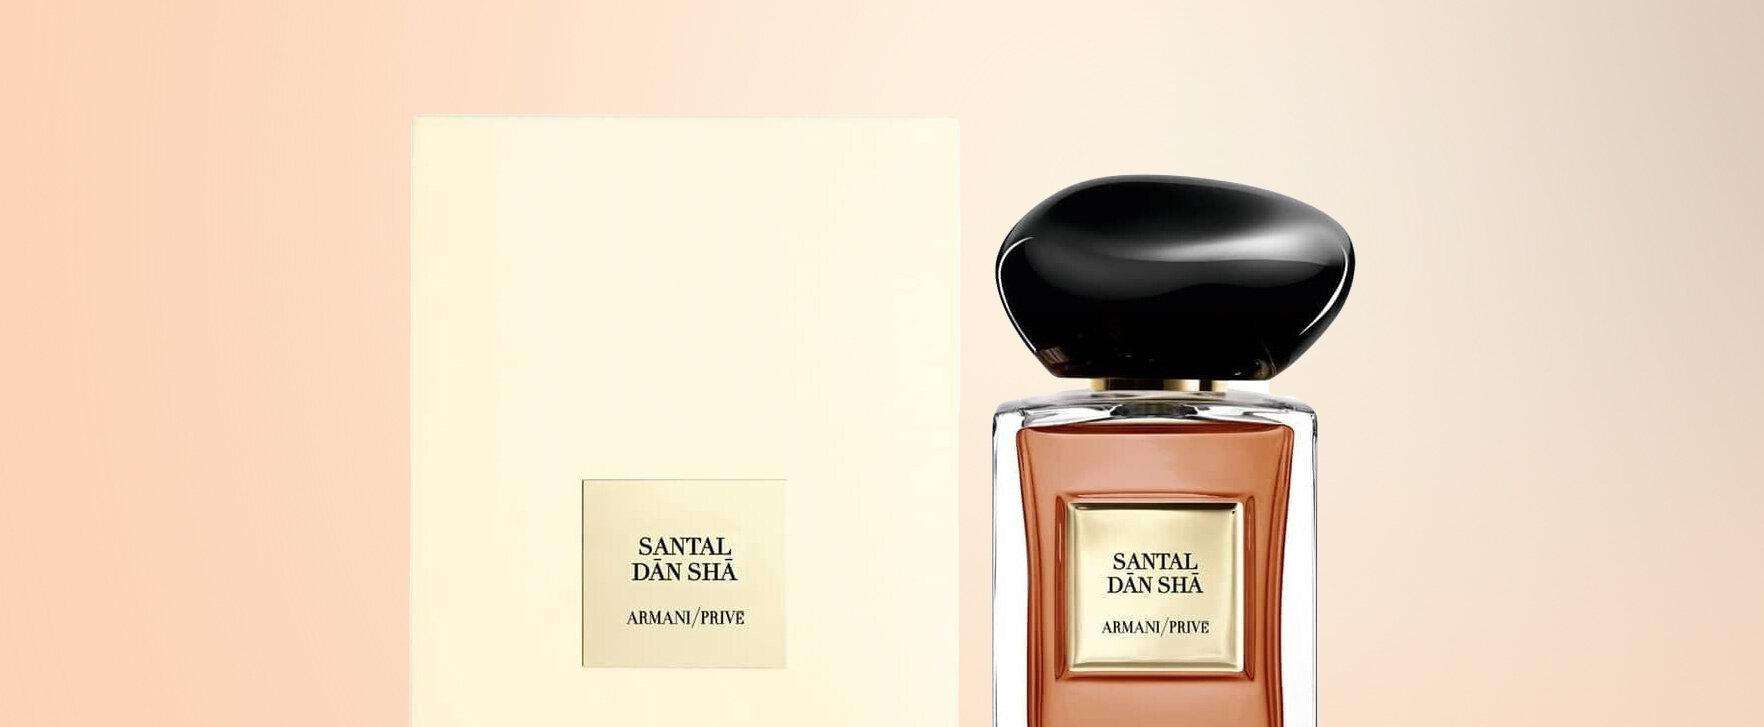 “Armani Privé - Santal Dān Shā” - New Woody Fresh Armani Unisex Fragrance